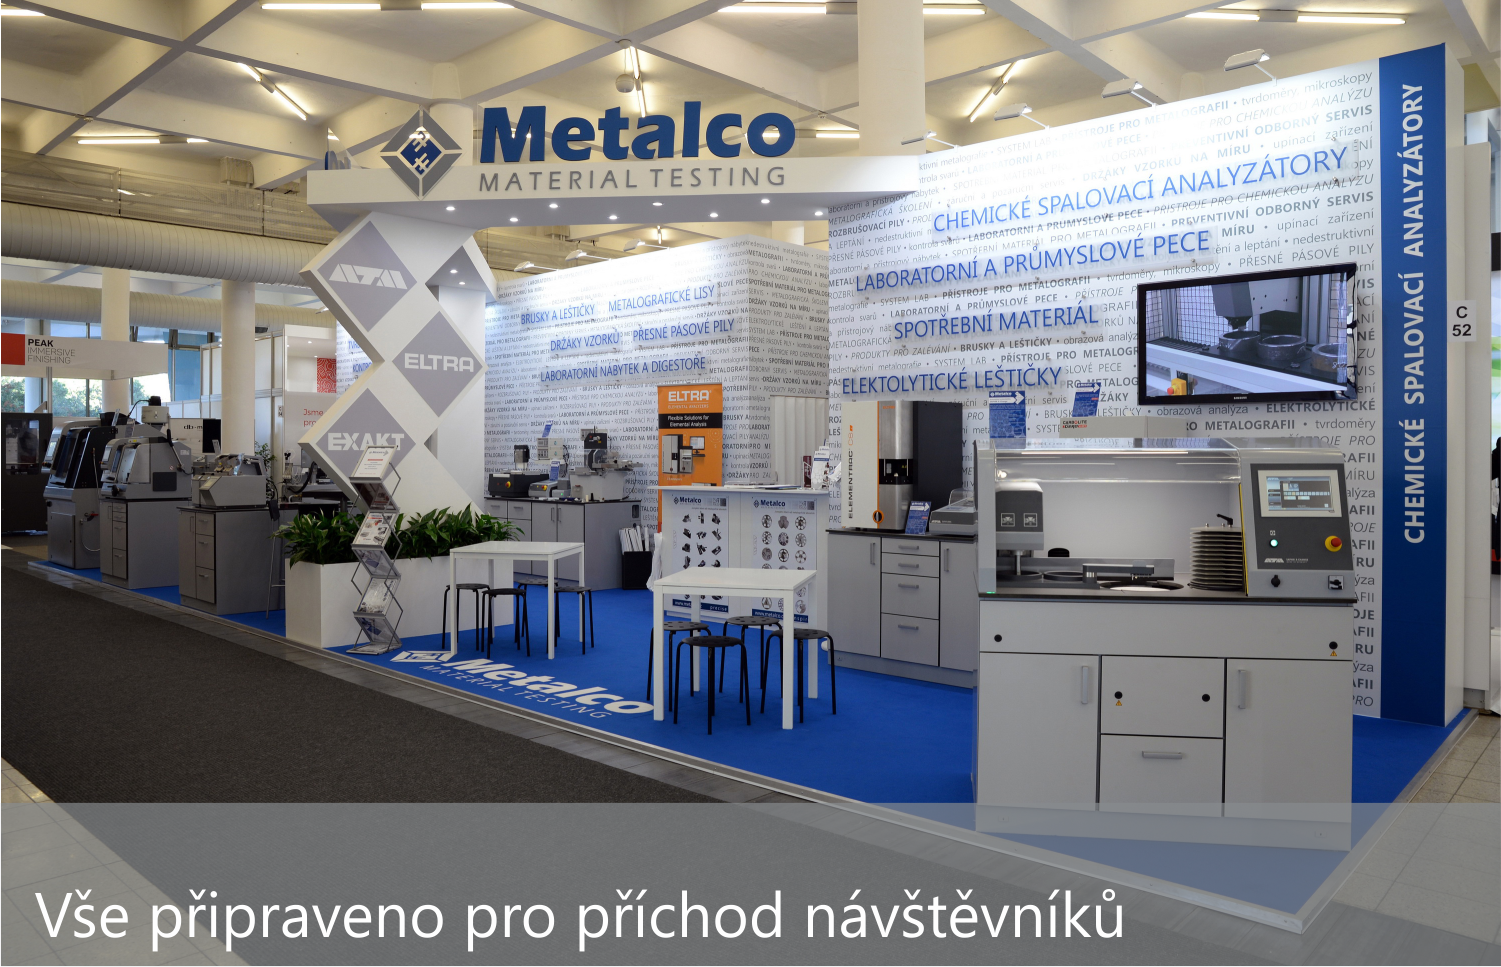 Ohlédnutí za účastí Metalco Testing na MSV v Brně